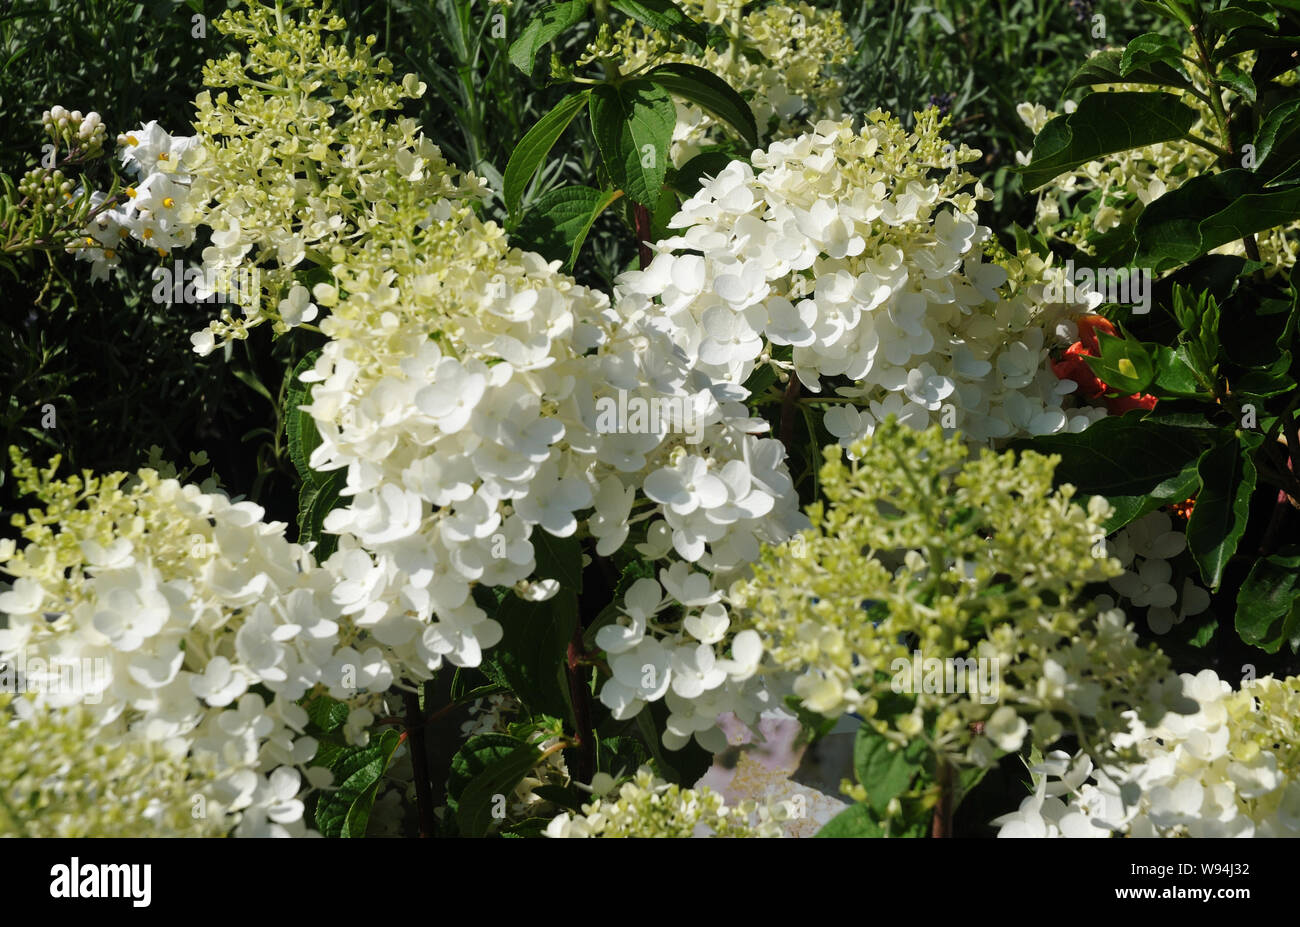 Image of Hortensia paniculata bushes